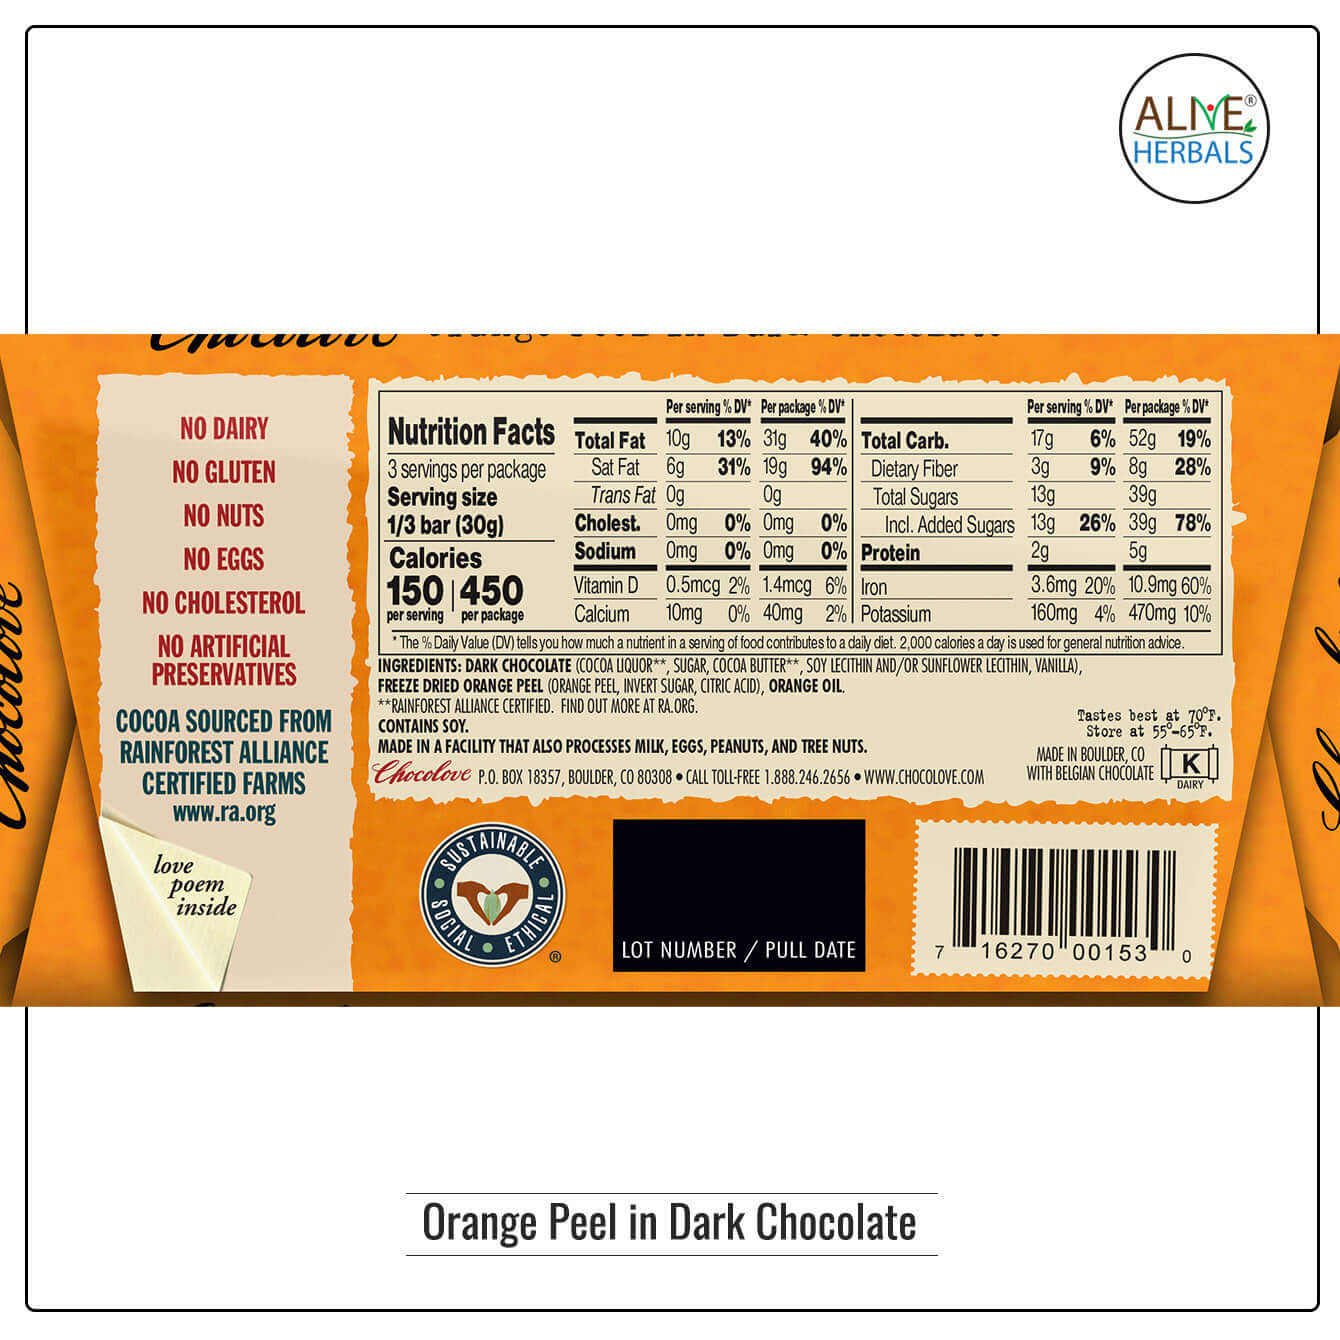 Orange Peel in Dark Chocolate - Buy at Natural Food Store | Alive Herbals.